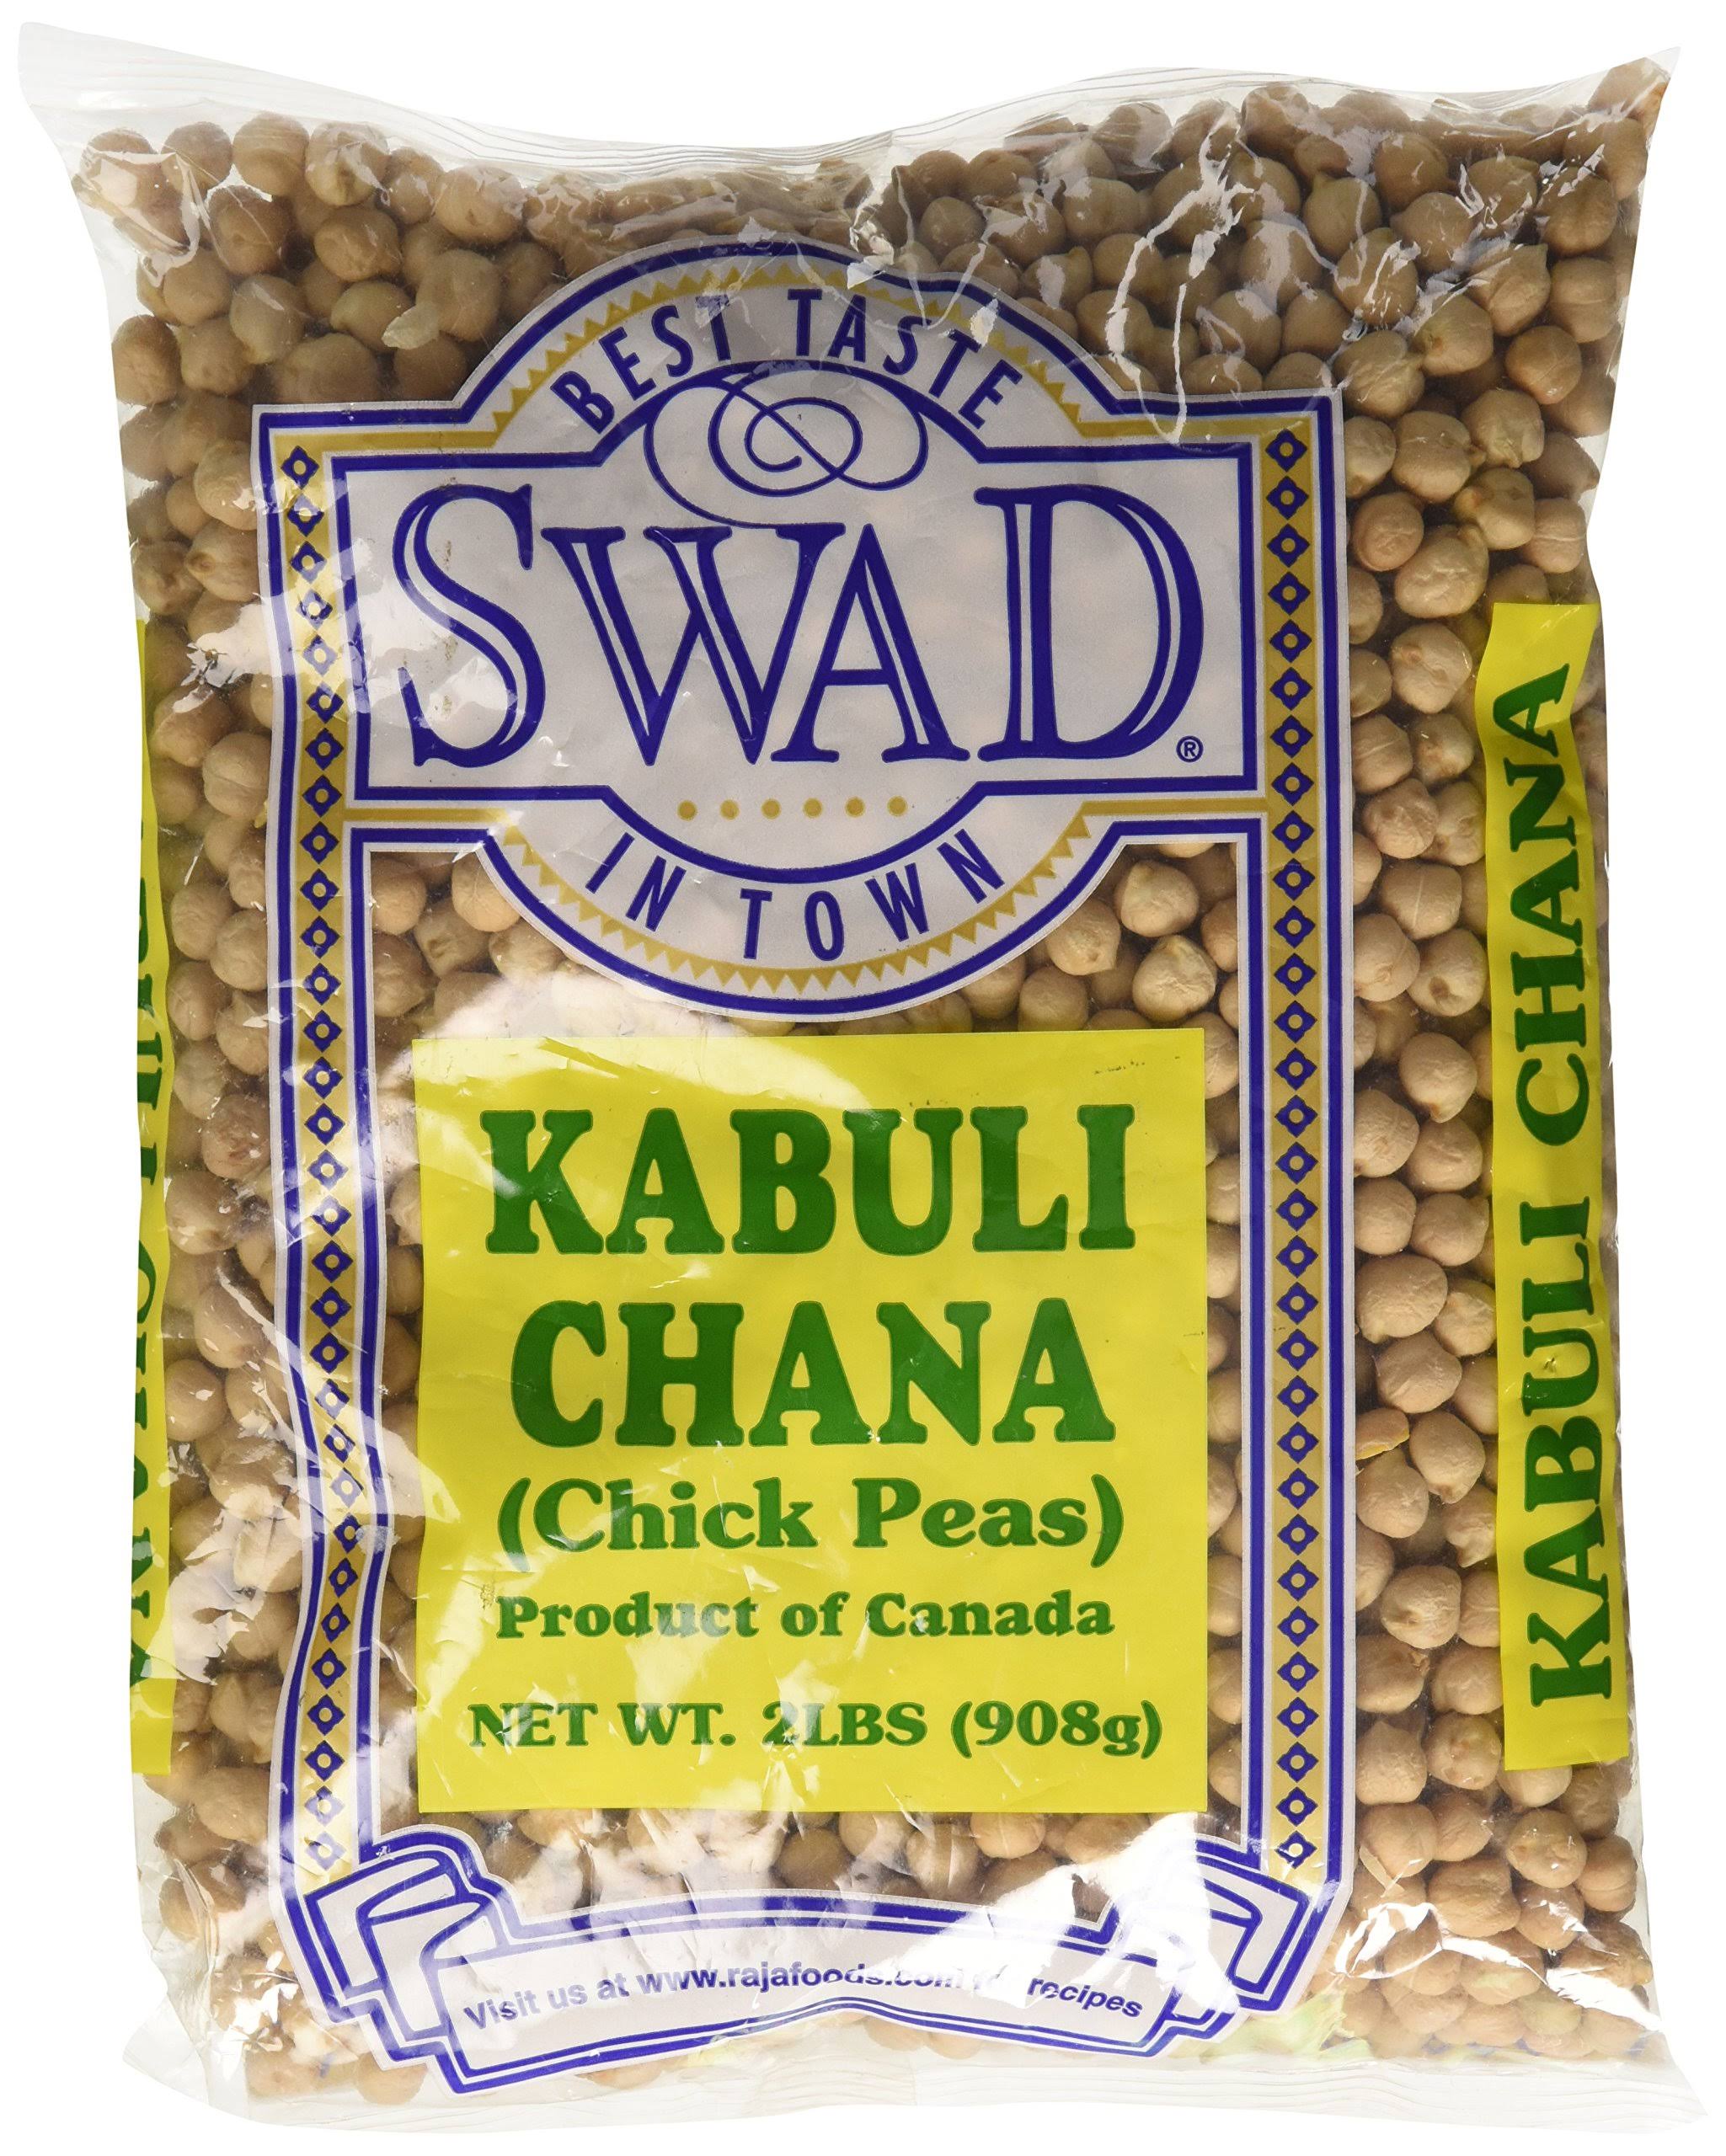 Swad Kabuli Chana Chick Peas - 32oz